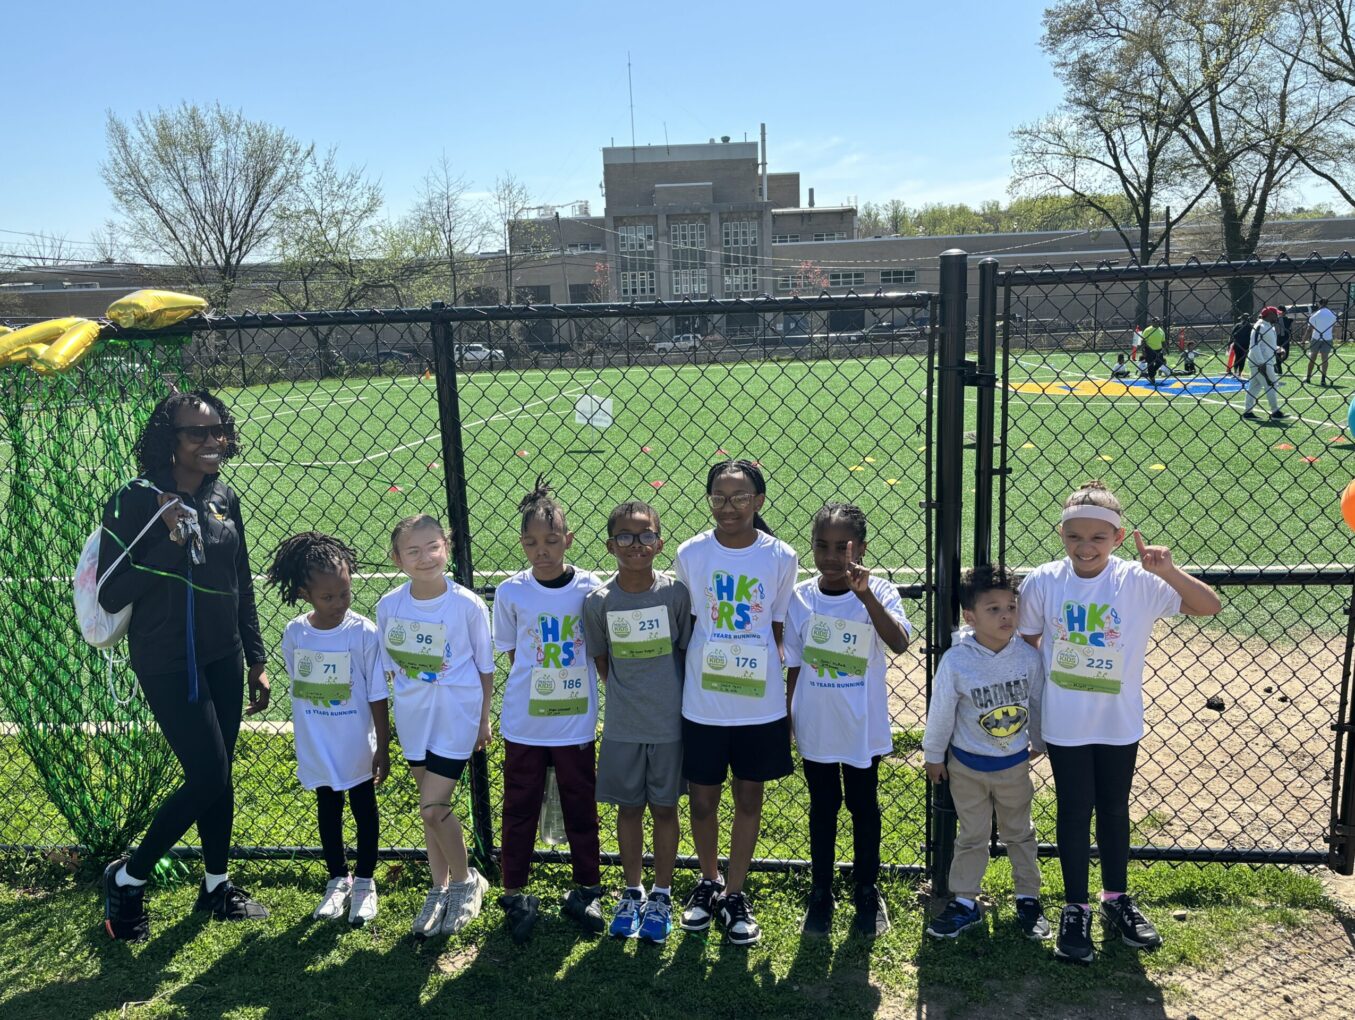 FA Teams Up with Healthy Kids Running to Launch Trenton Fun Run Program